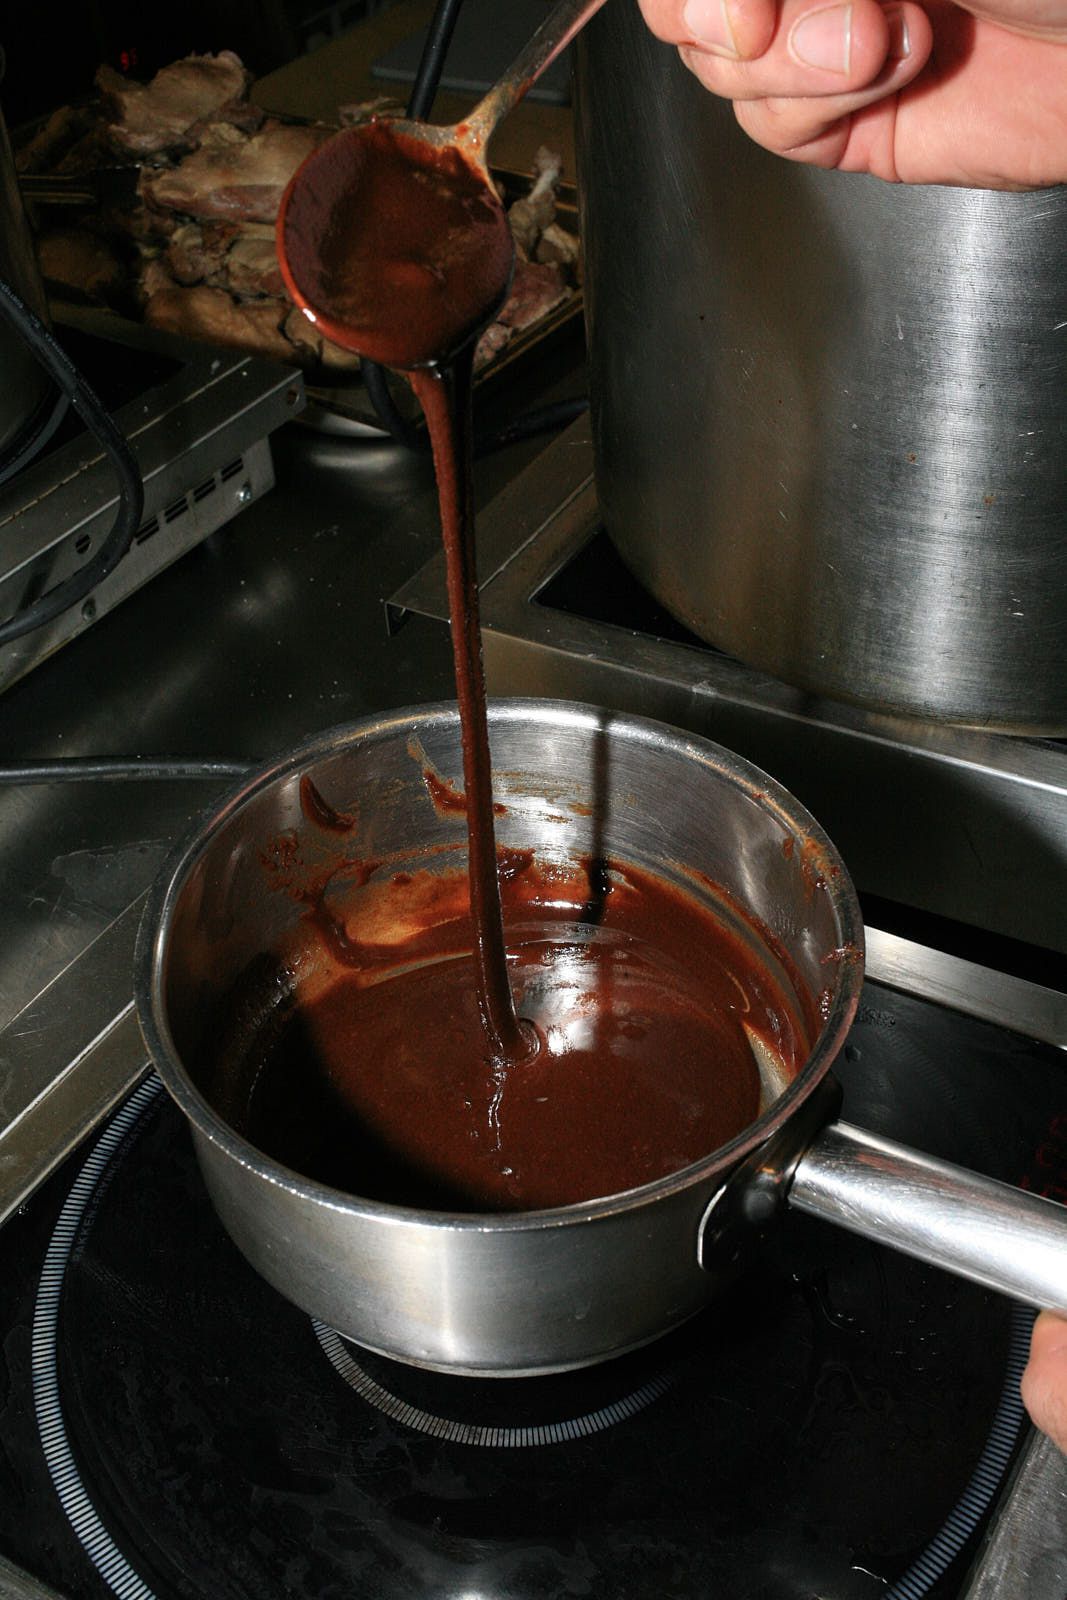 A pan of dark brown roux, as dark as dark chocolate, on the stove.